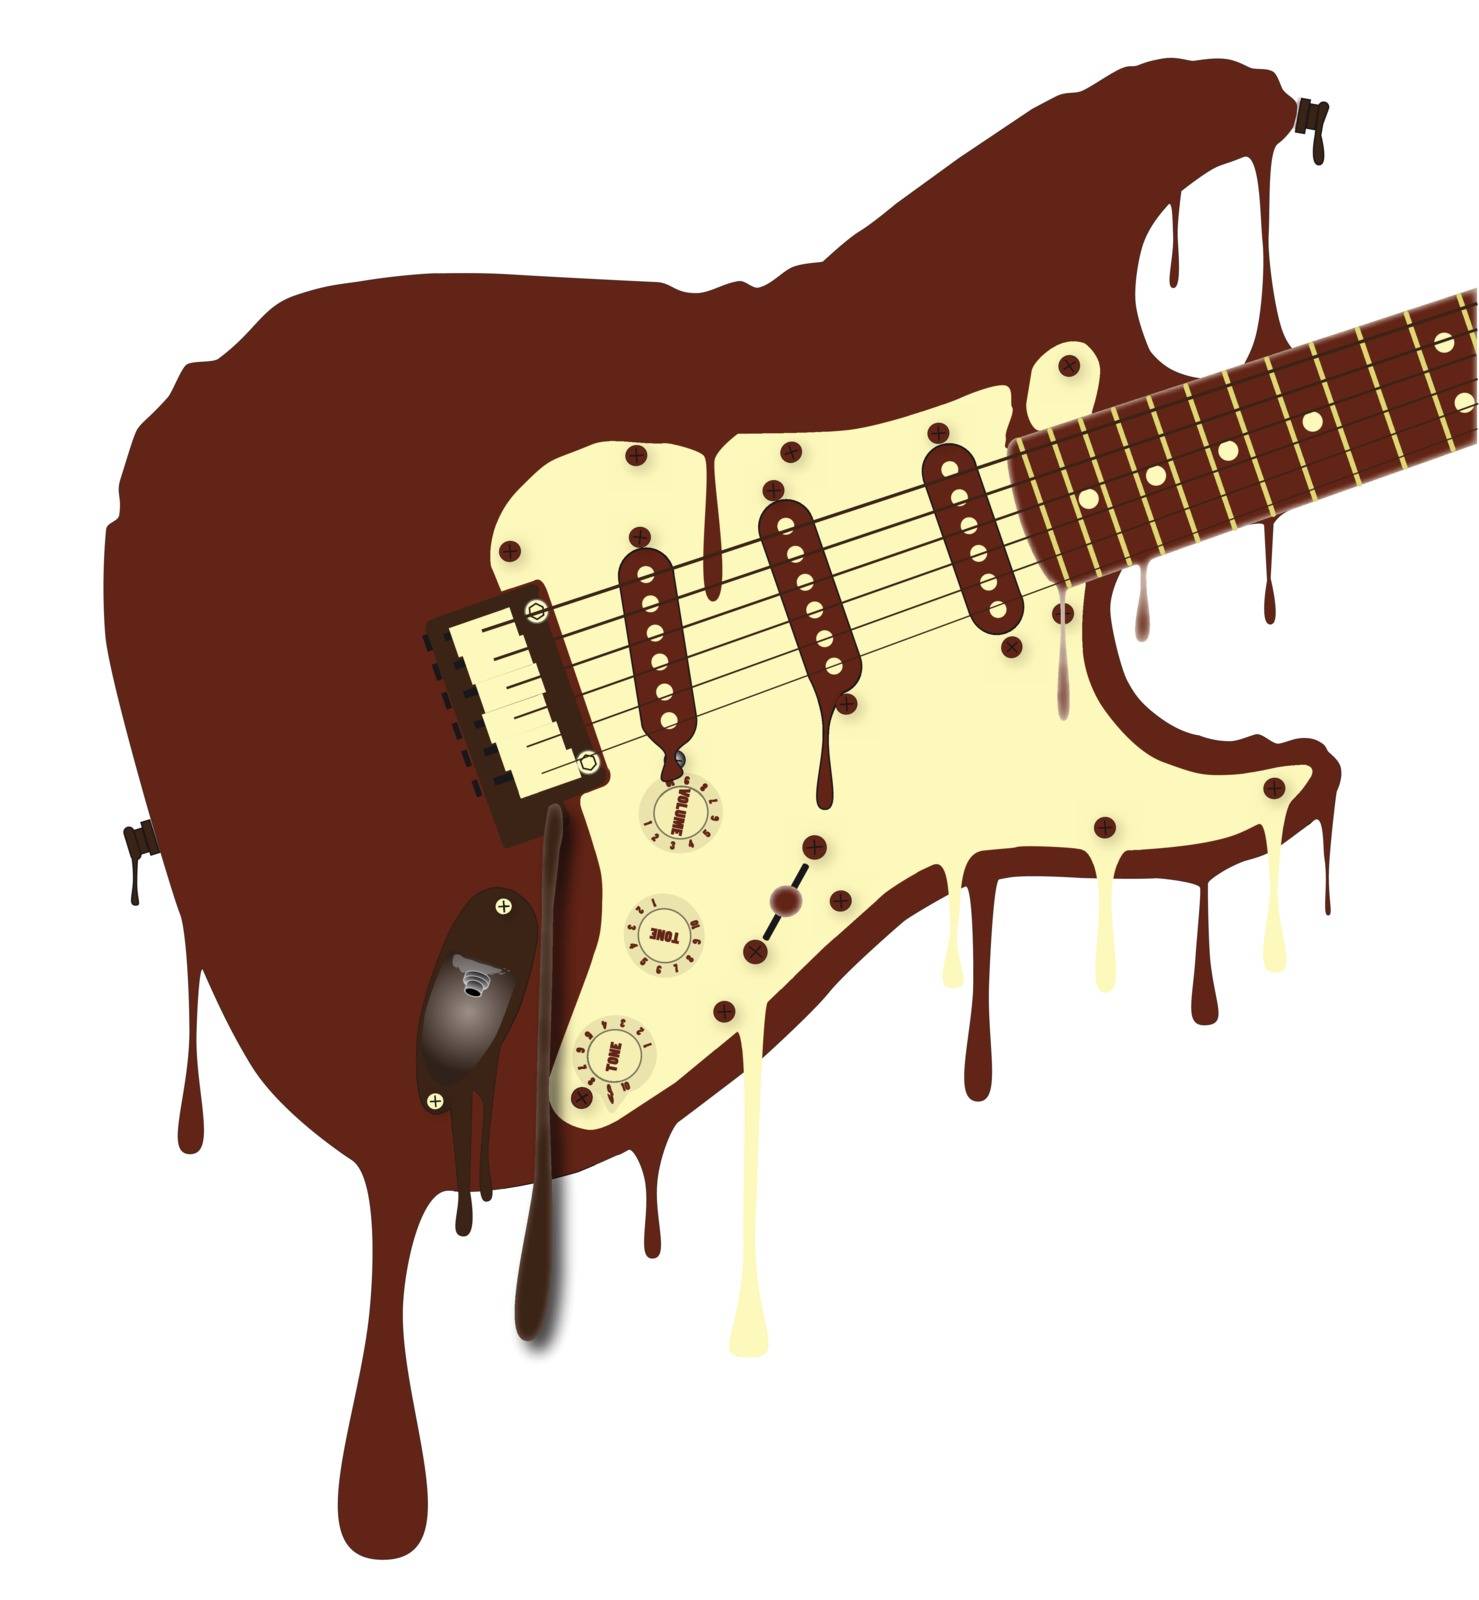 A chocolate rock guitar melting down